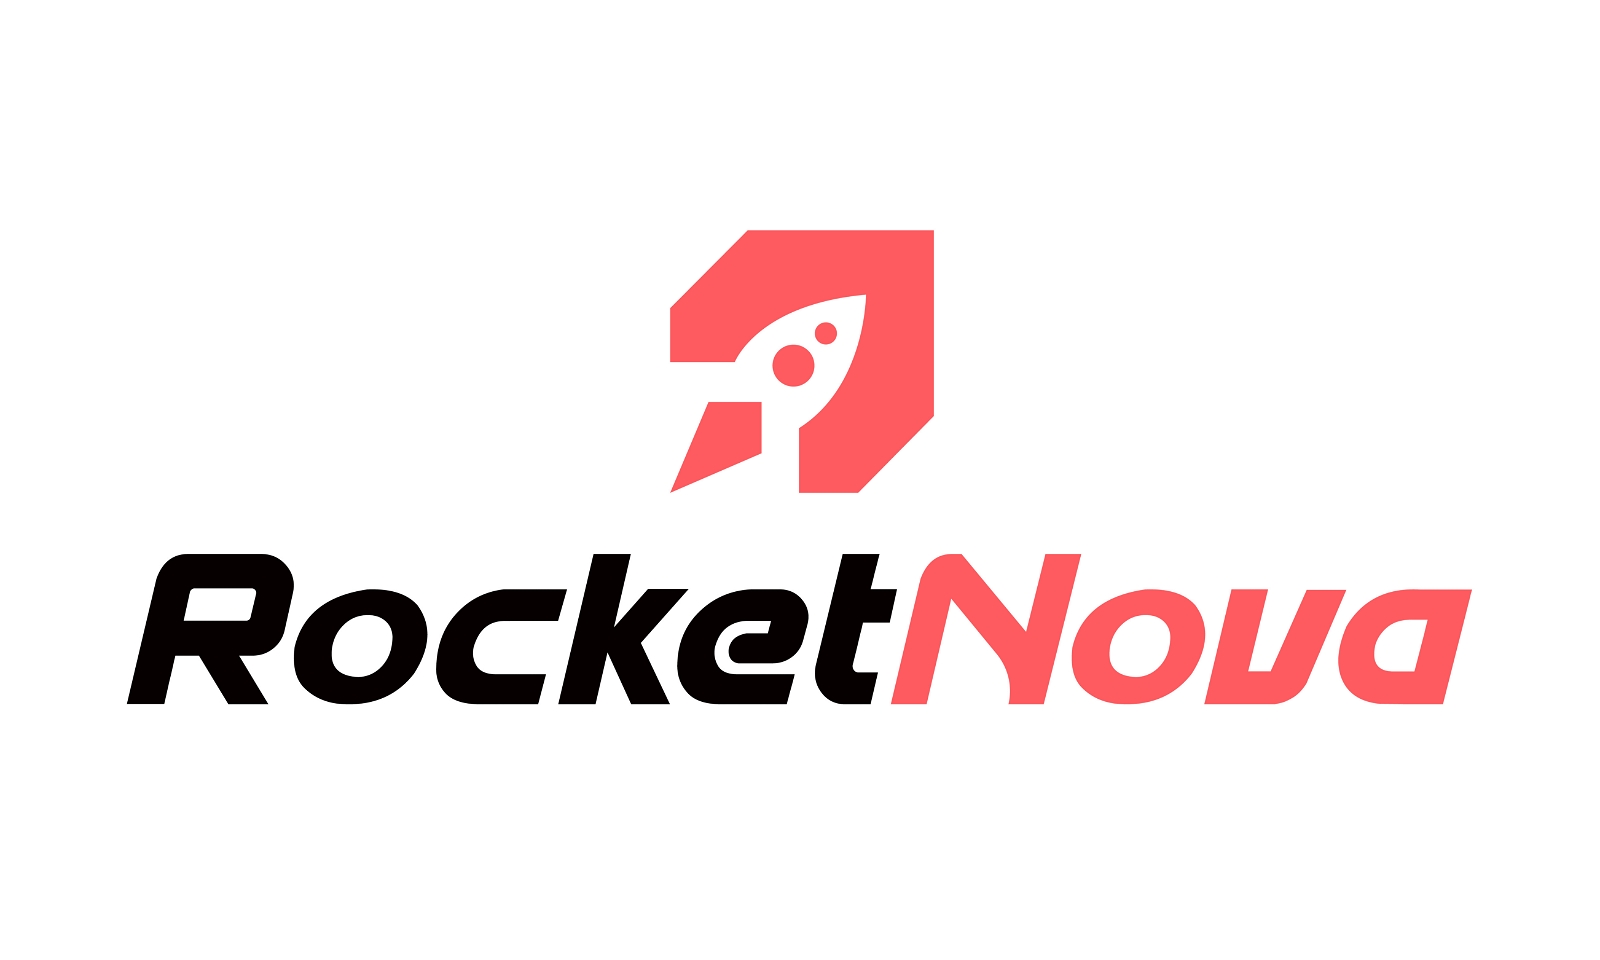 RocketNova.com - Creative brandable domain for sale